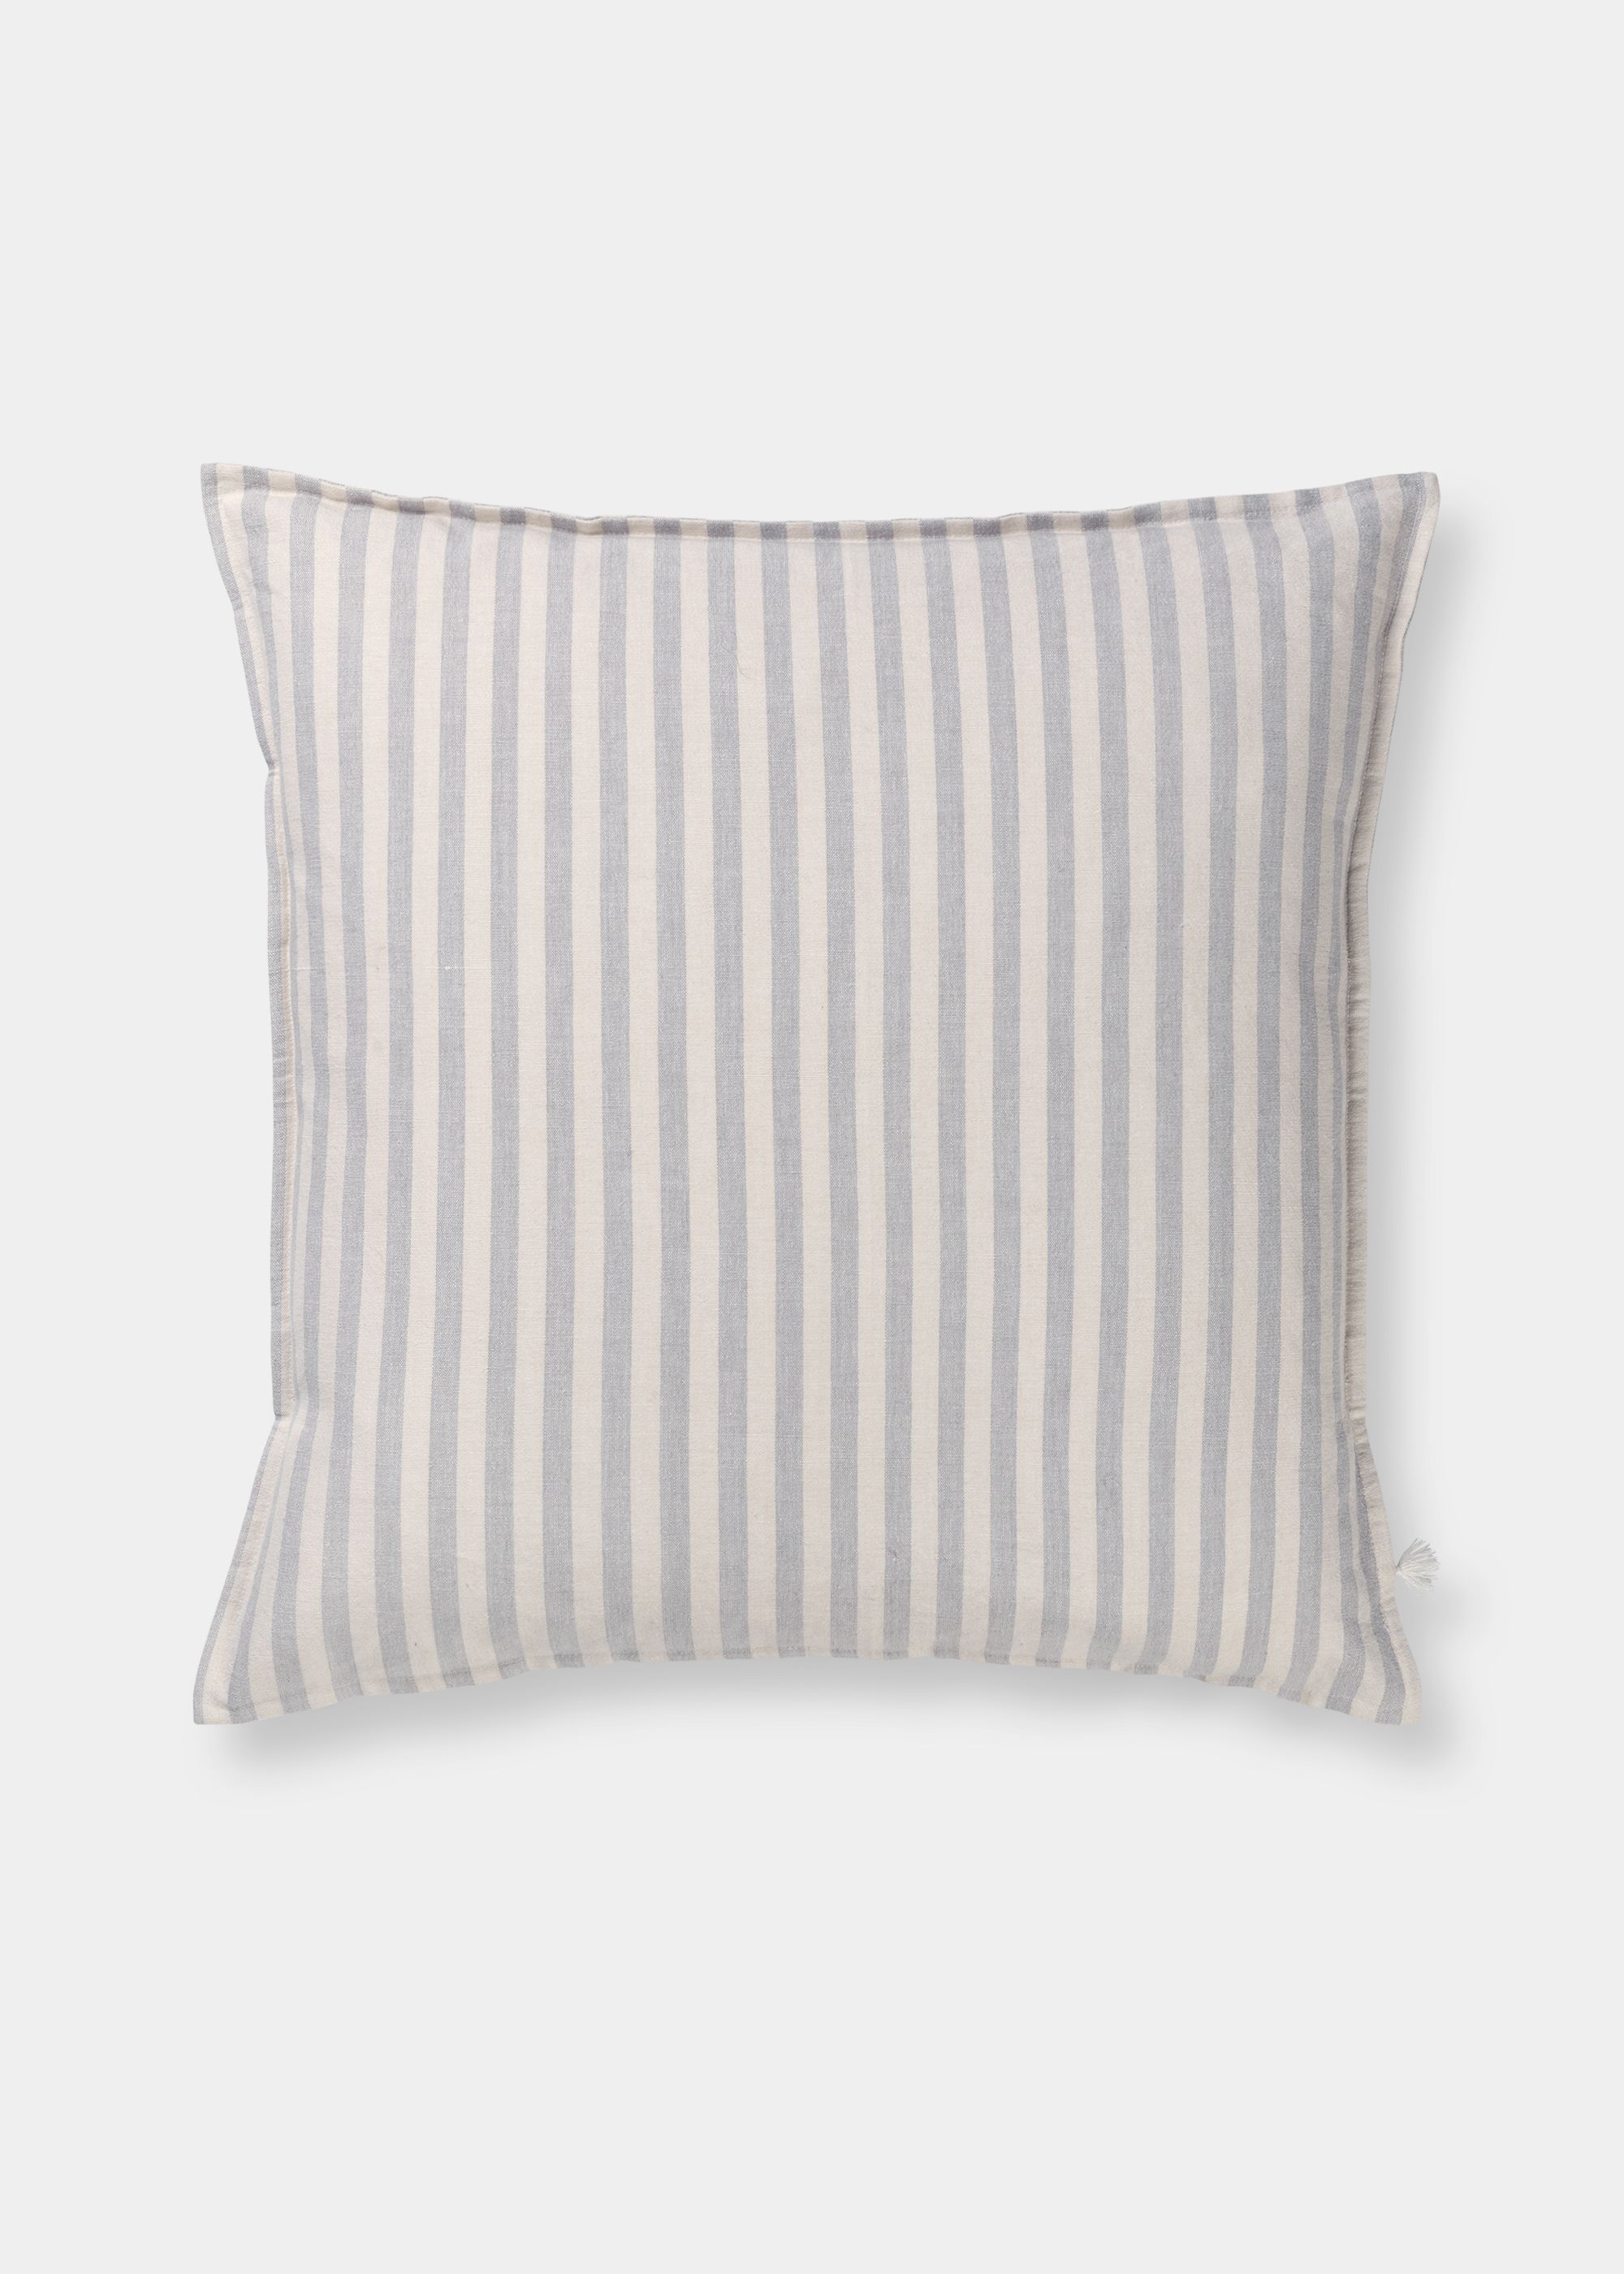 Cushions - Pillow Vacanza (50x50)